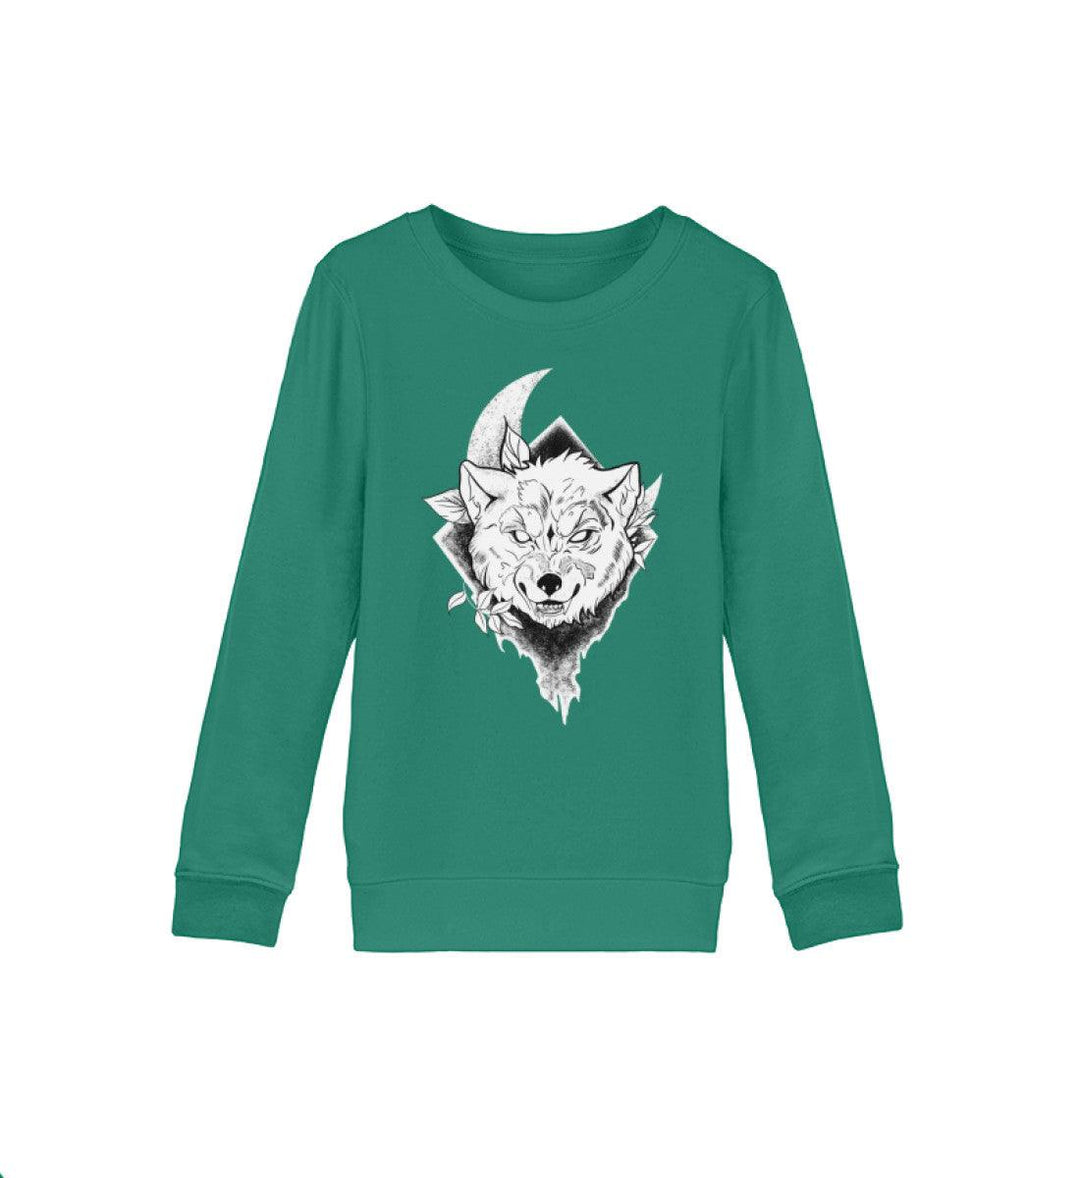 Bad Wolf - Kinder Bio Sweatshirt